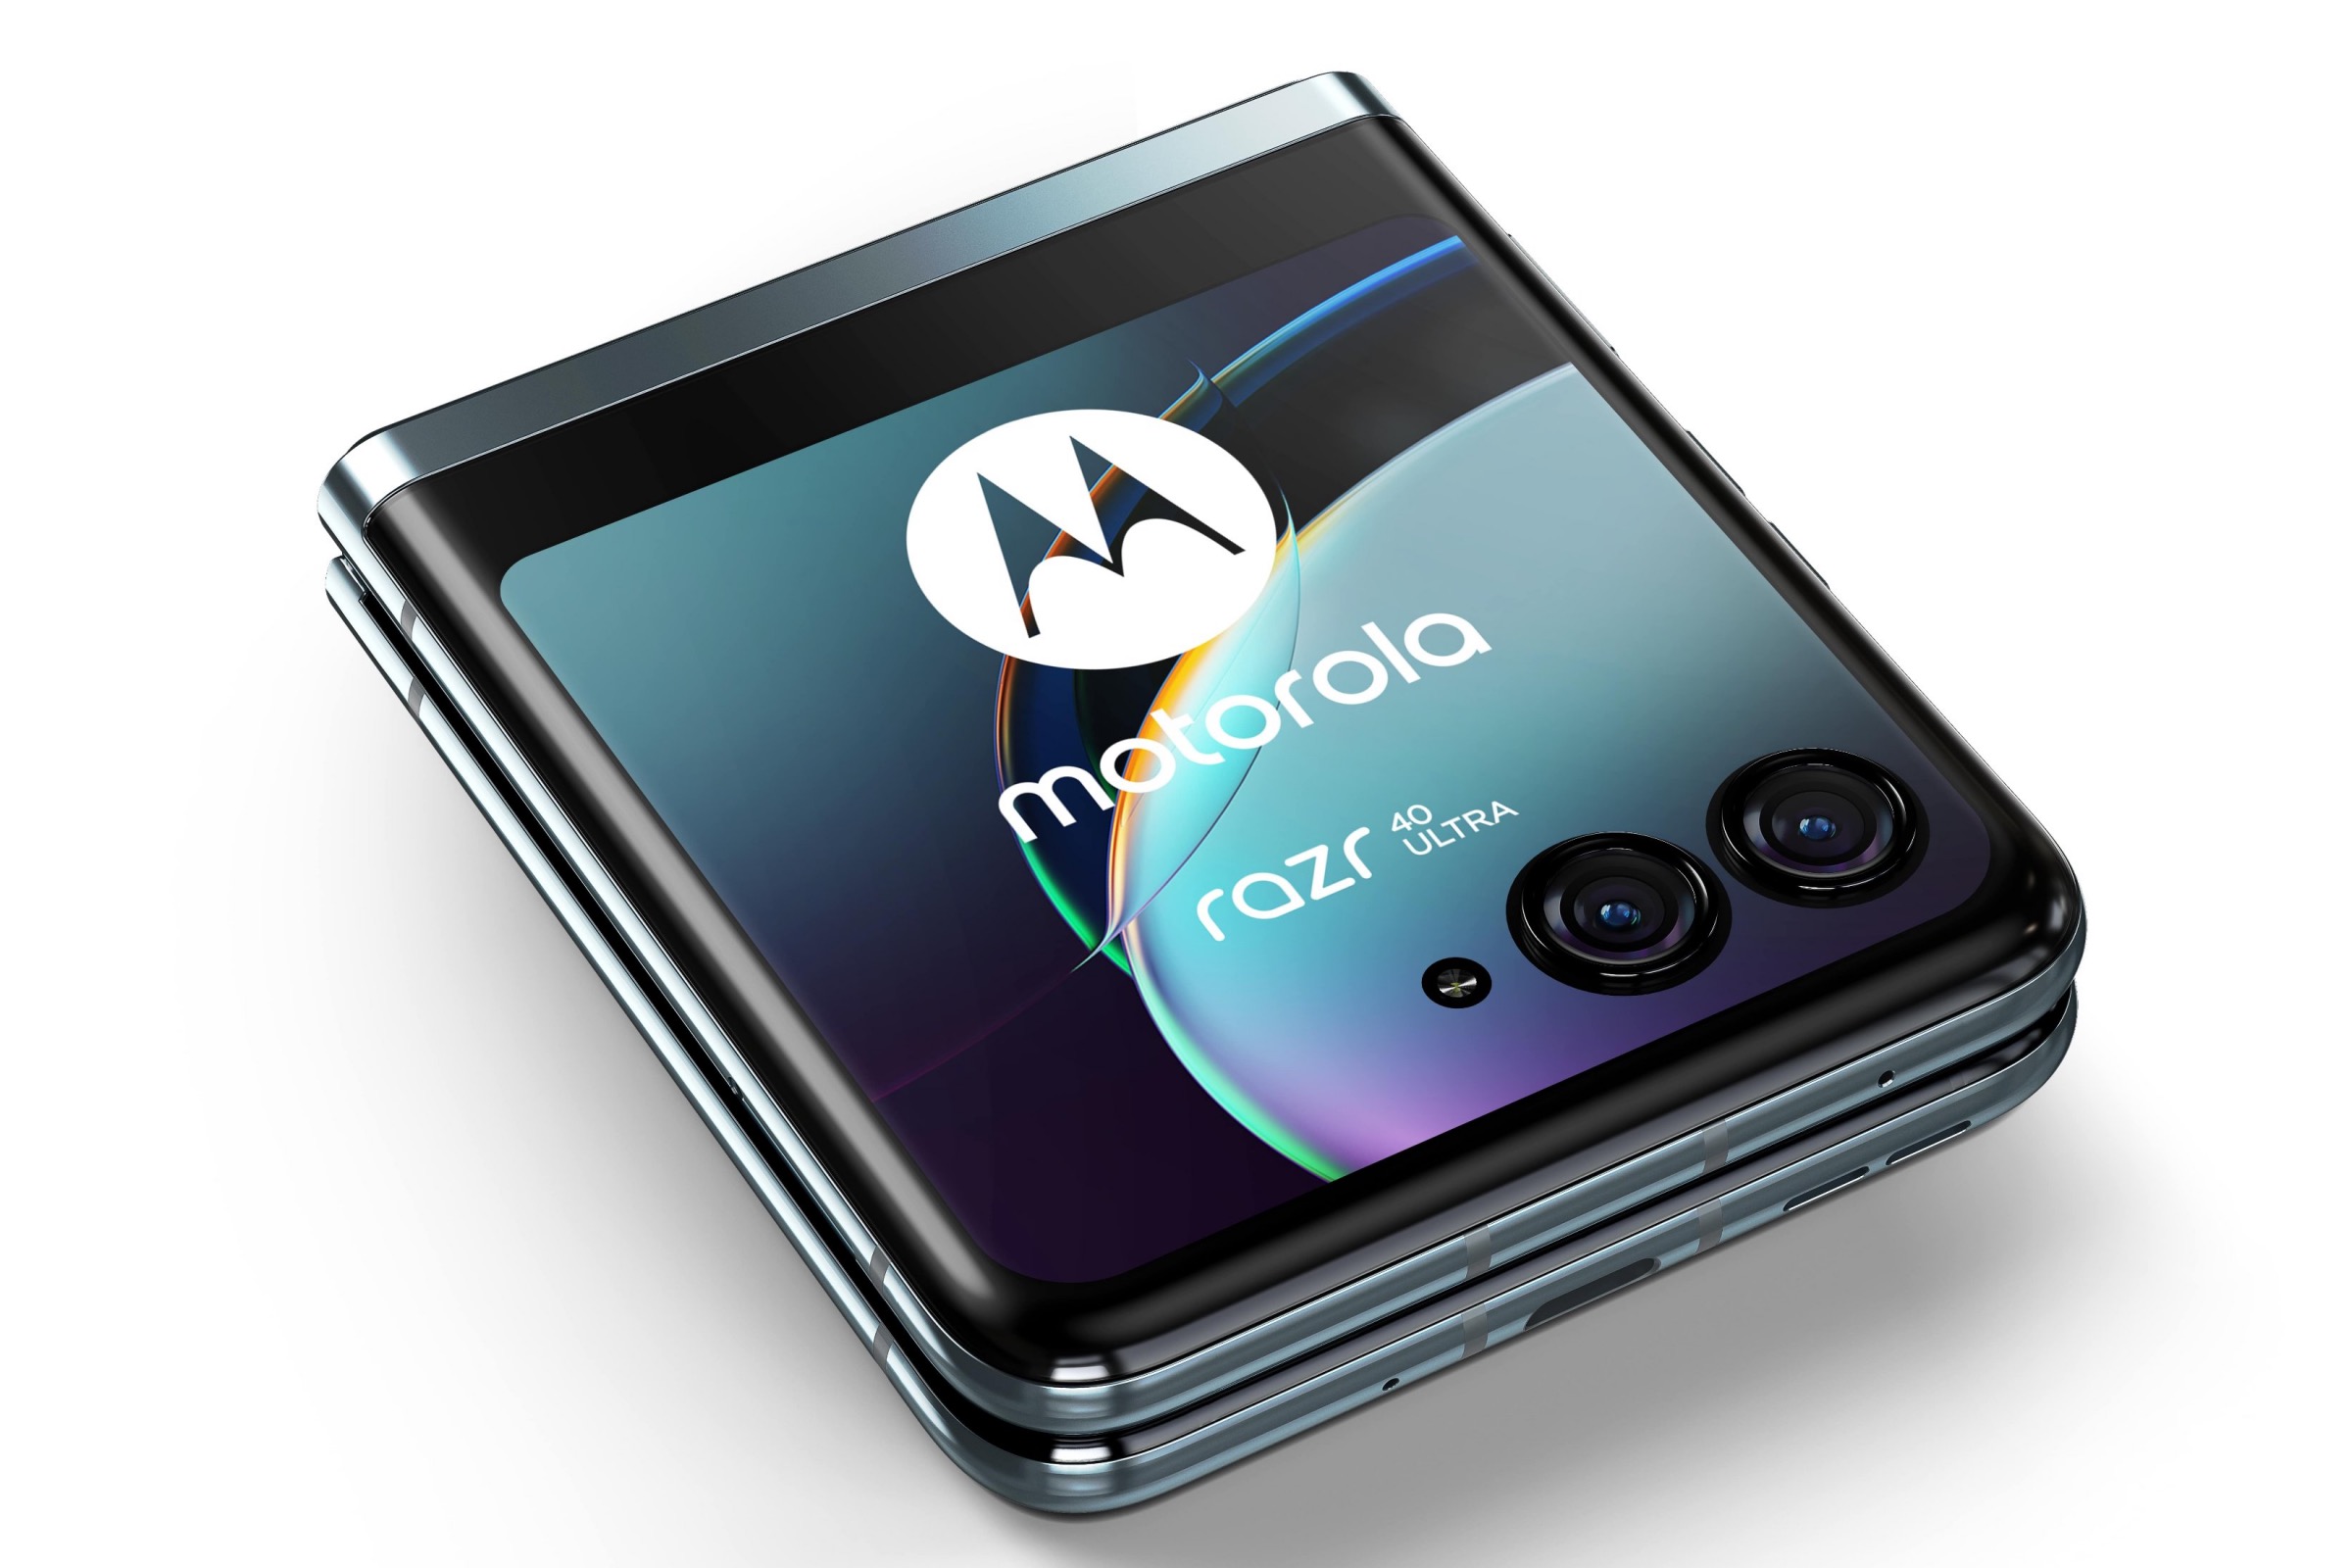 Motorola Razr 40 Ultra review